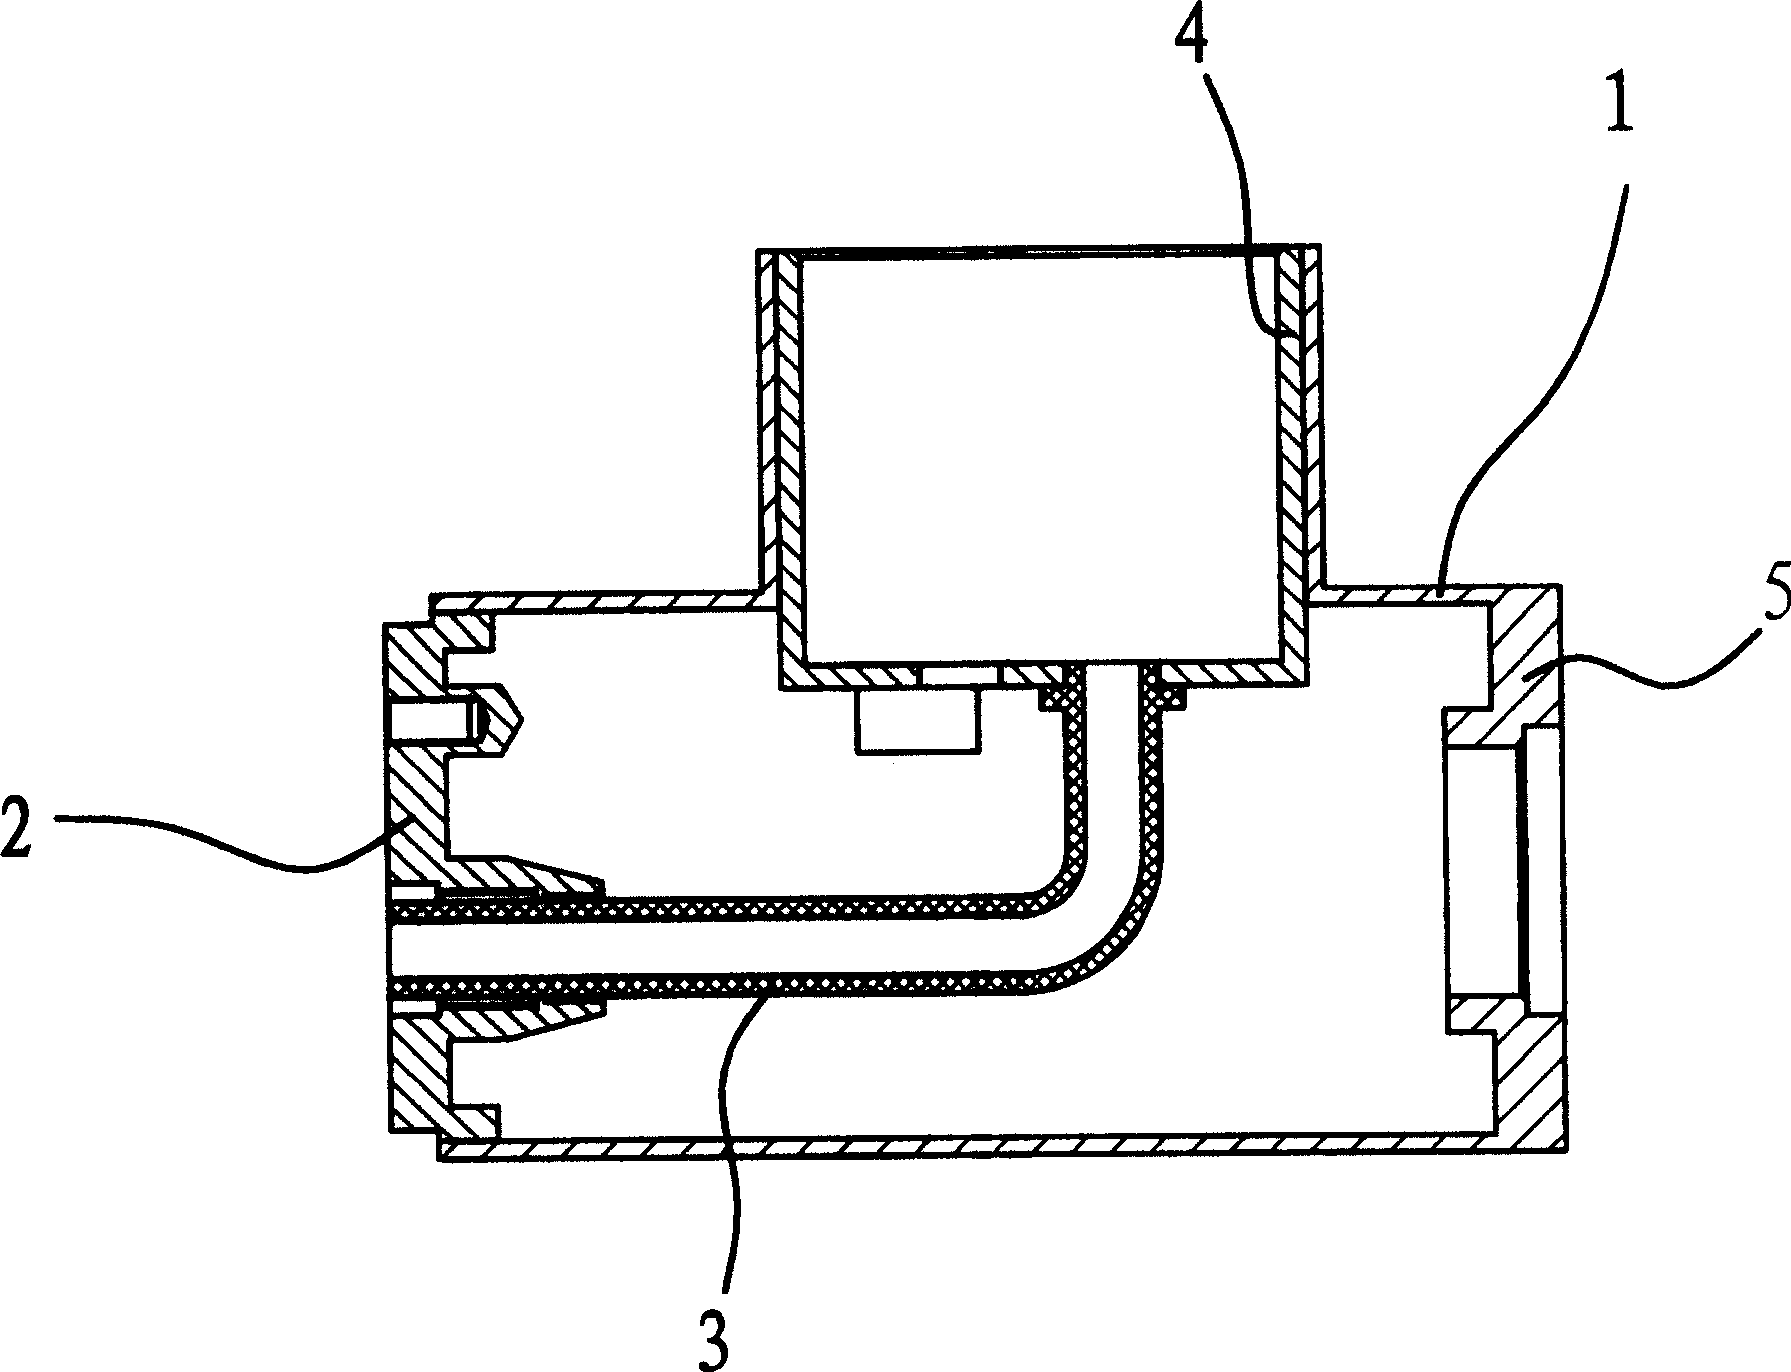 Manufacturing method of tap valve body